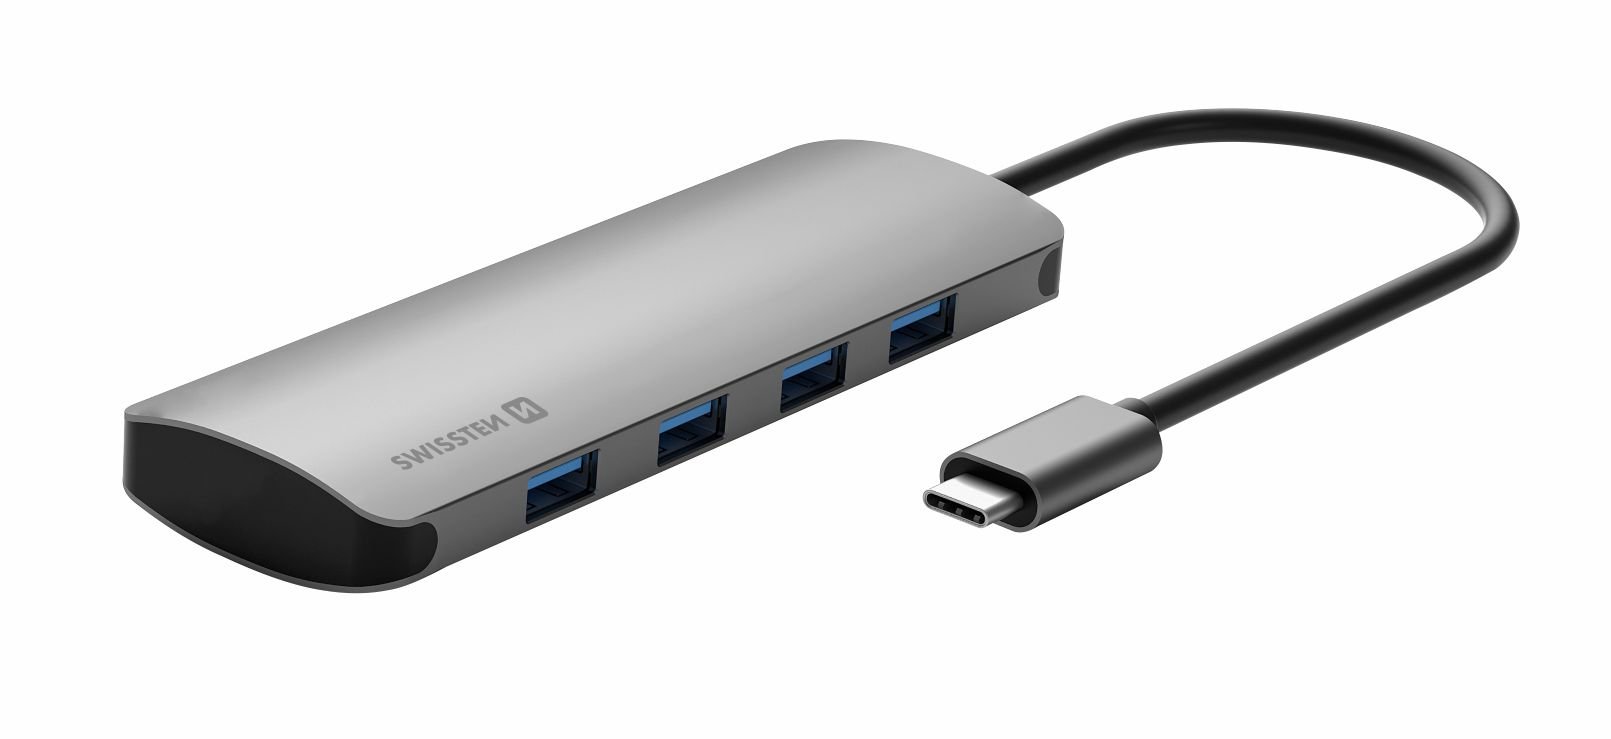 Swissten USB-C Hub 4in1  with 4 USB 3.0 ports / Aluminum body